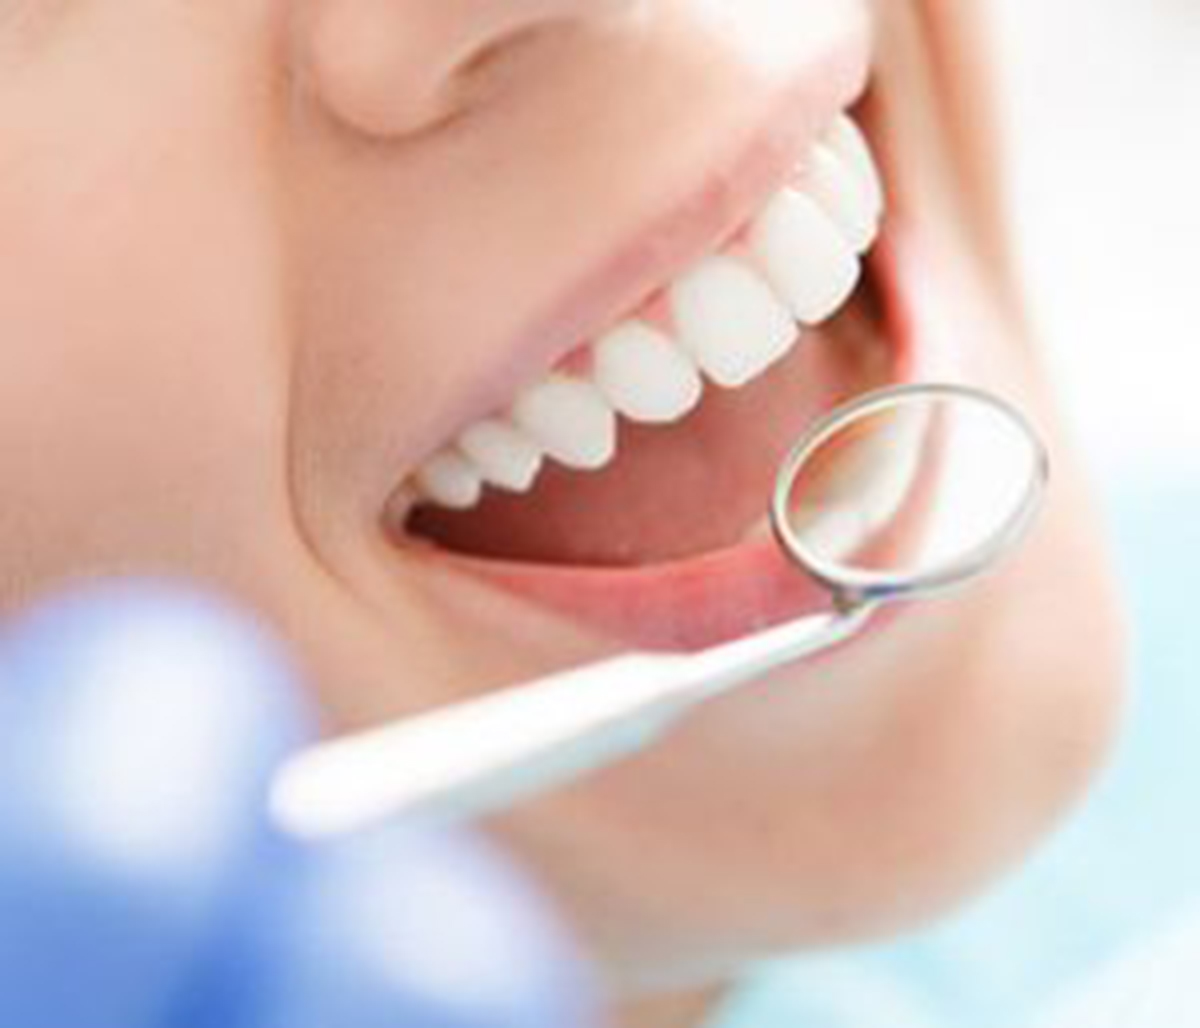 Dentists near Charlotte highlight zirconium dental implants